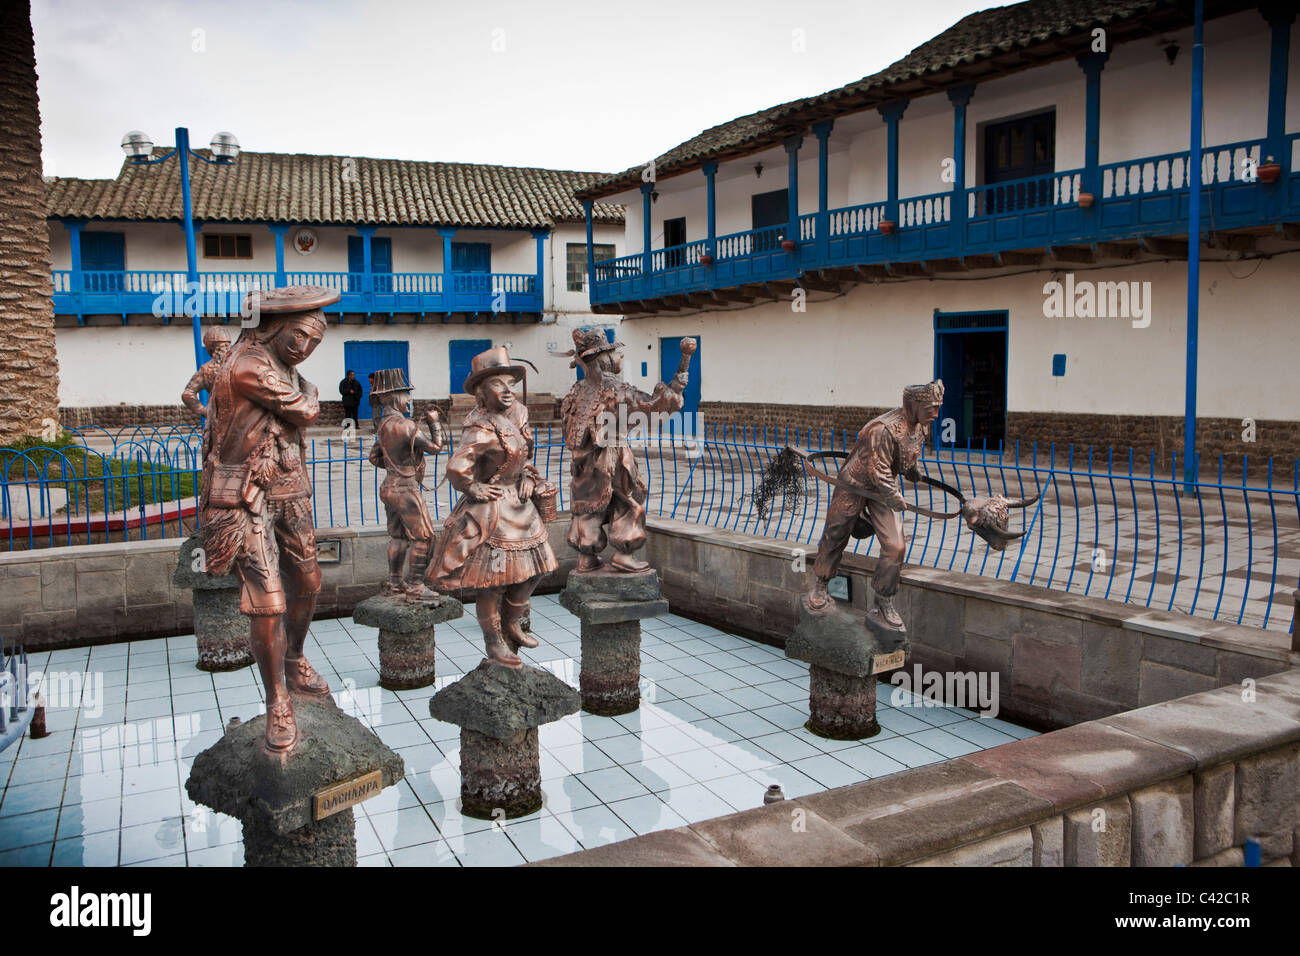 Peru, Paucartambo, Statues on main square. Stock Photo